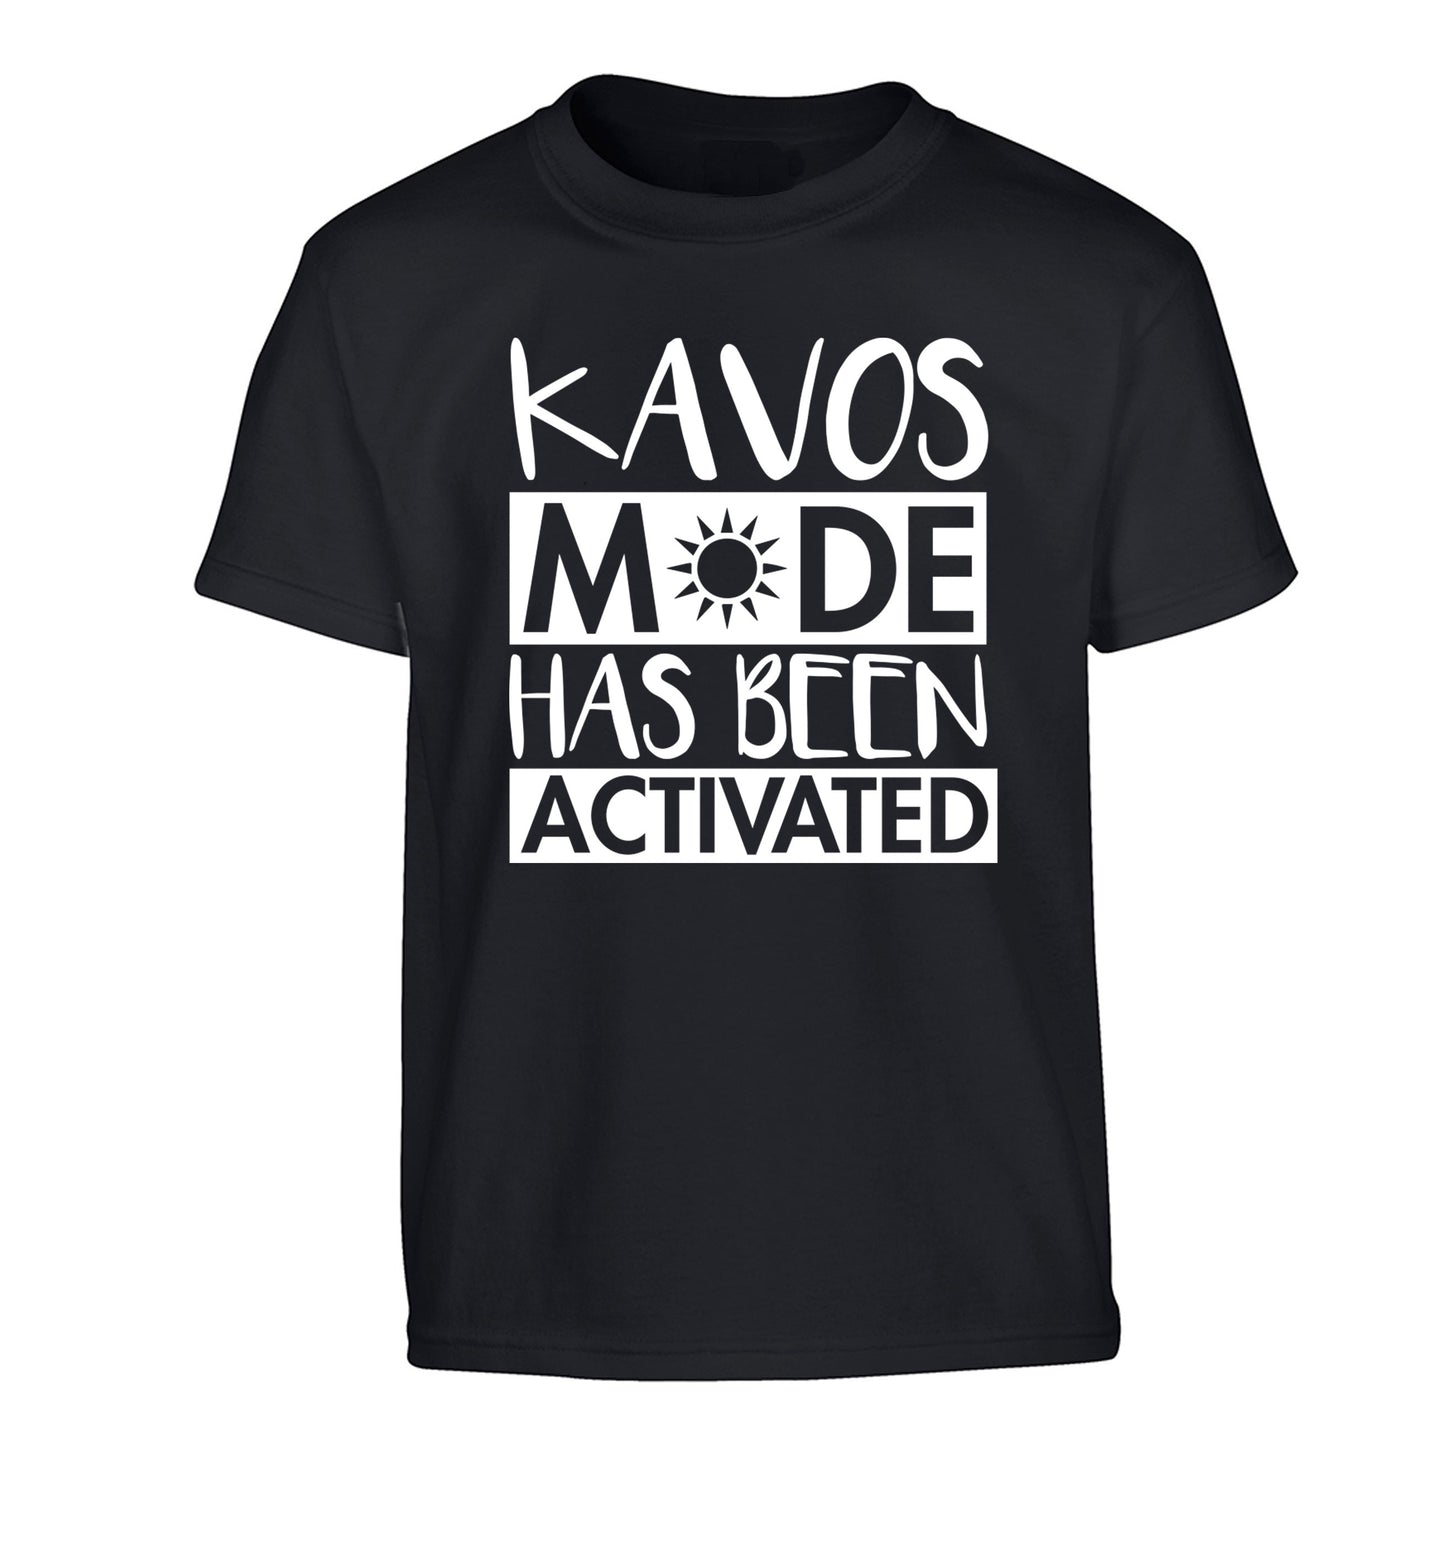 Kavos mode has been activated Children's black Tshirt 12-14 Years